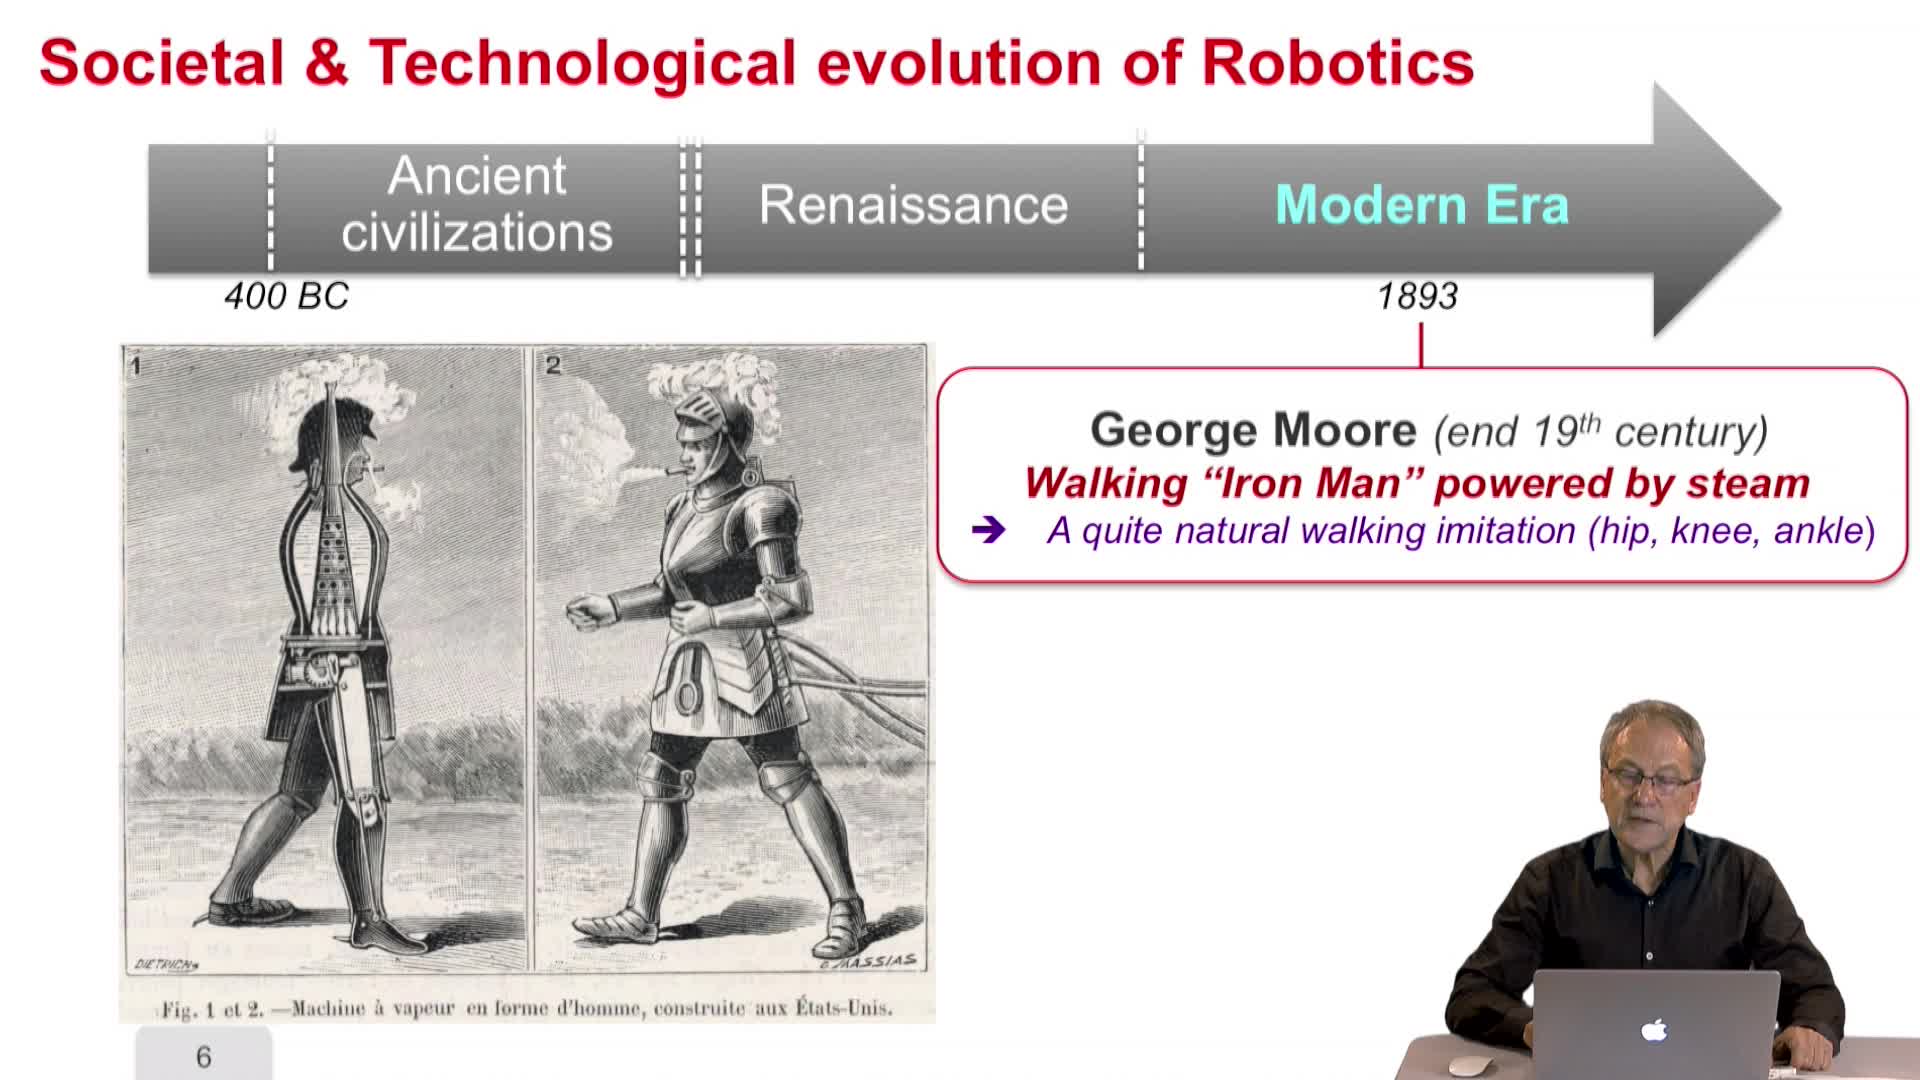 1.2. Technological evolution of Robotics & State of the Art